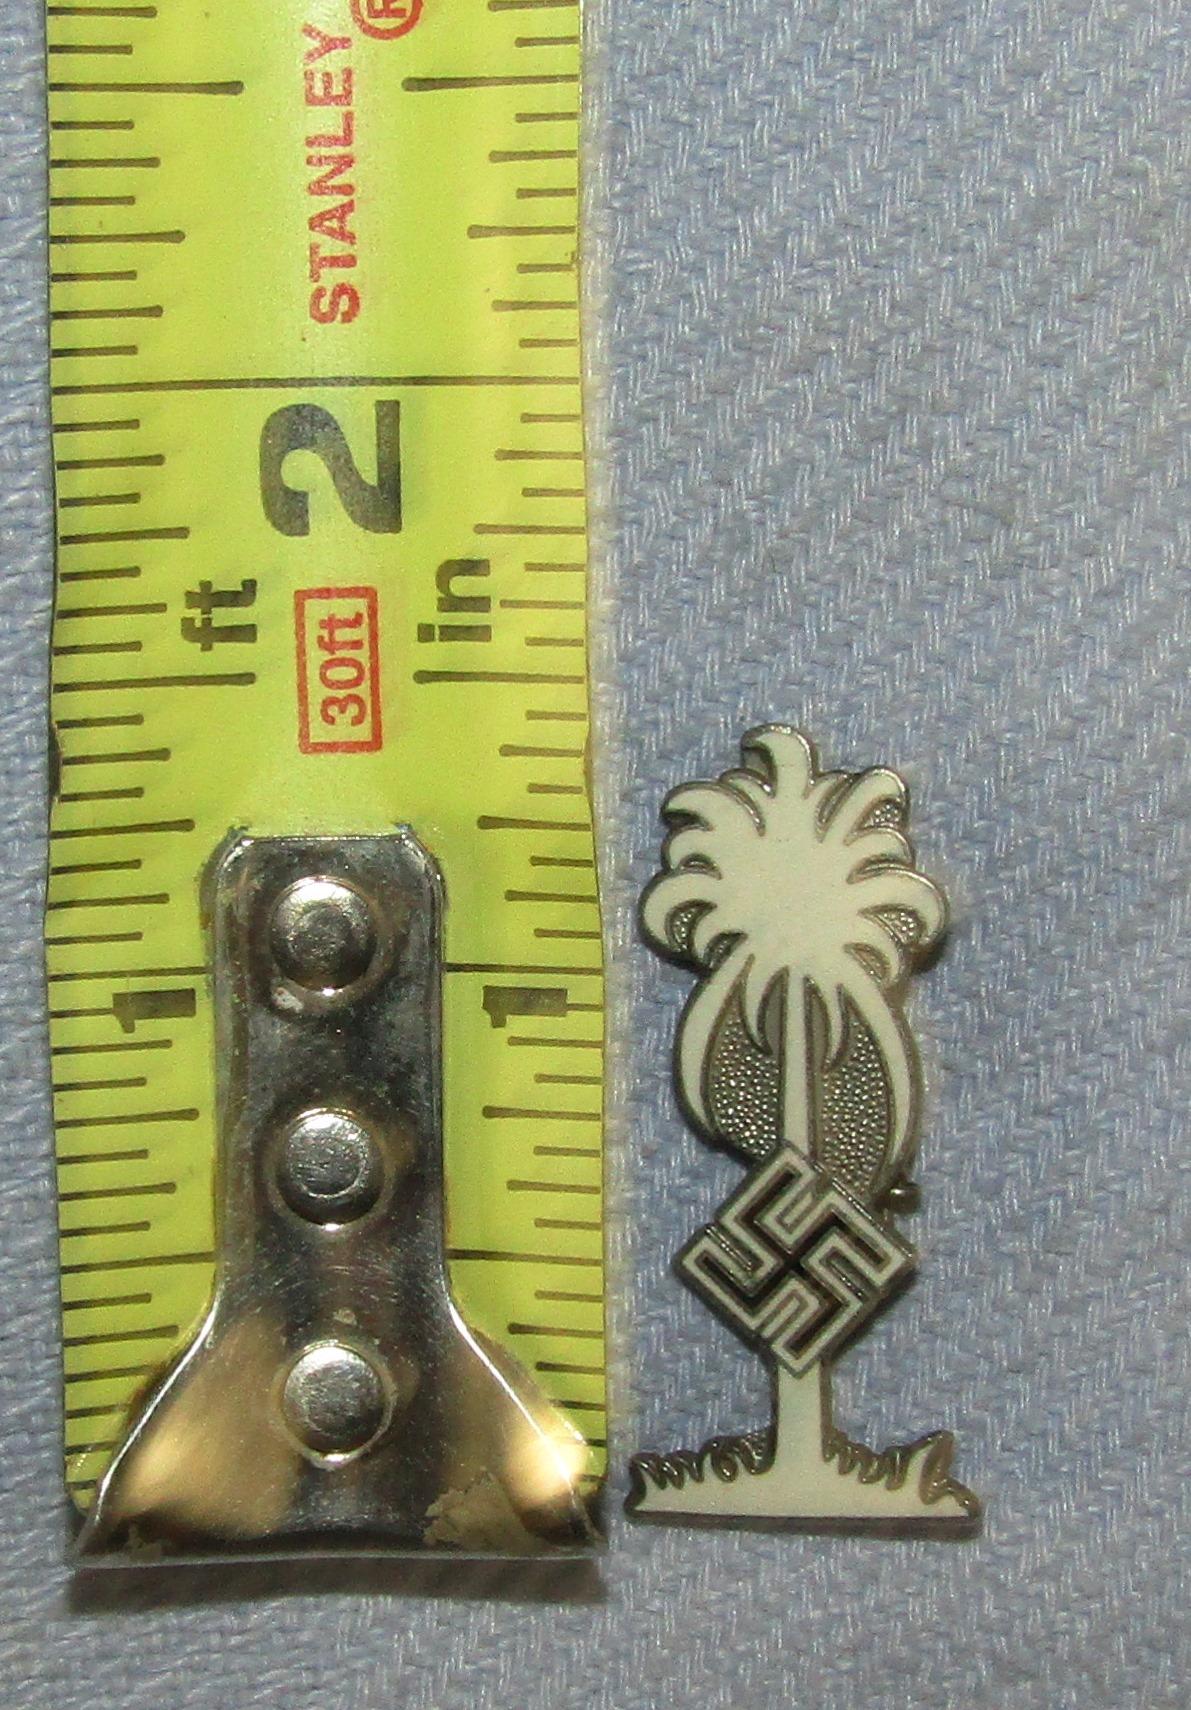 Enamel Afrika Korps Palm Tree Lapel Pin "Ges. Gesch."